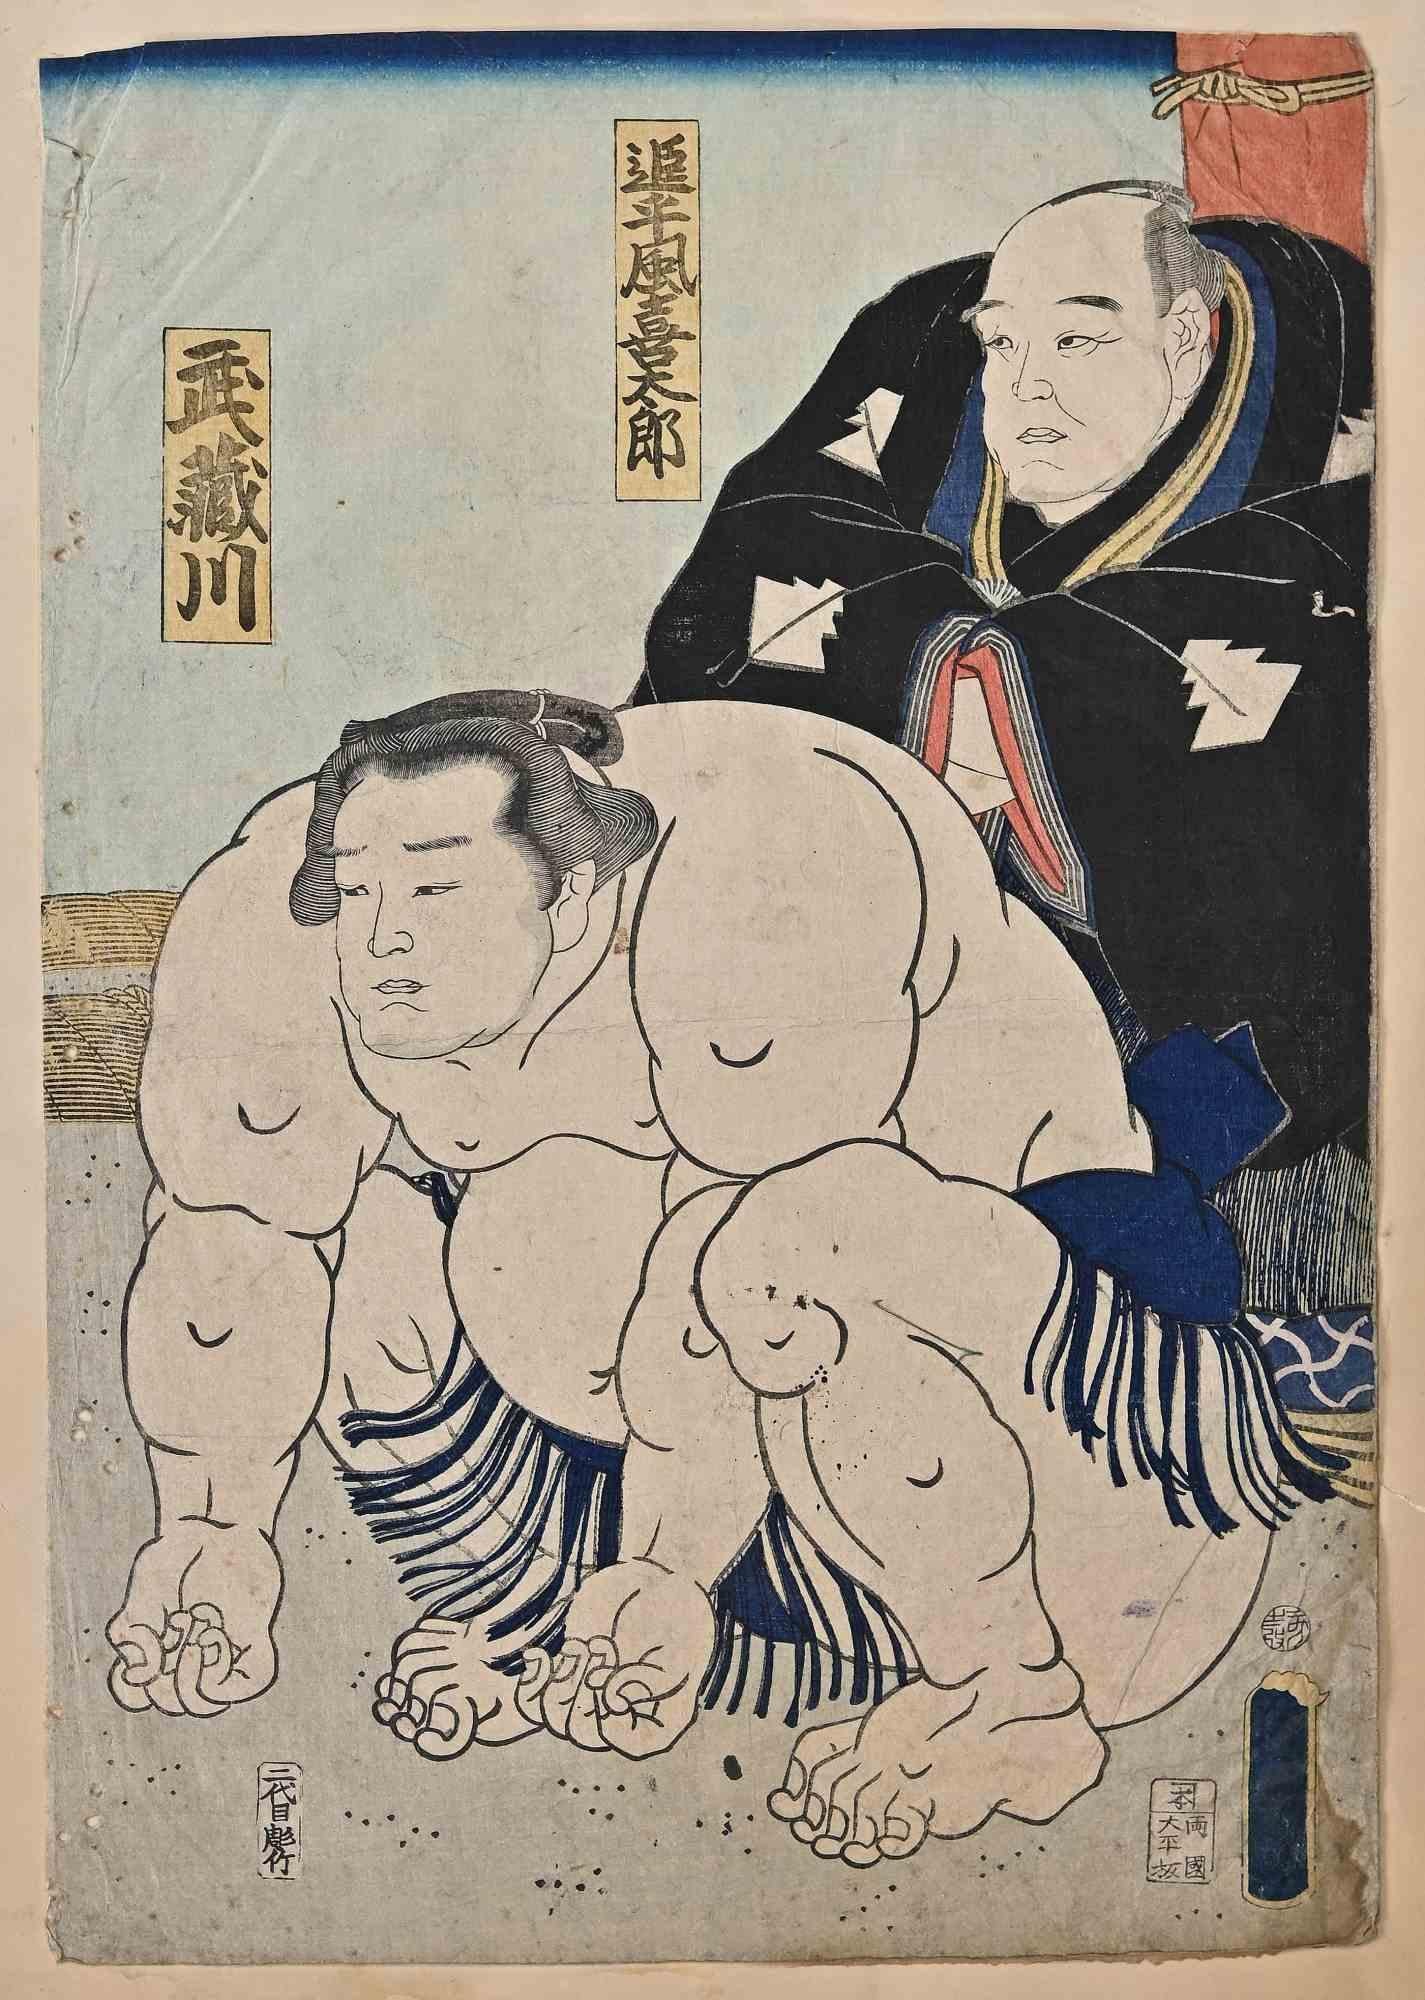 Utagawa Kunisada (Toyokuni III) Landscape Print - Sumo Fighter - Woodblock Print by Utagawa Kunisada - Mid-19th Century